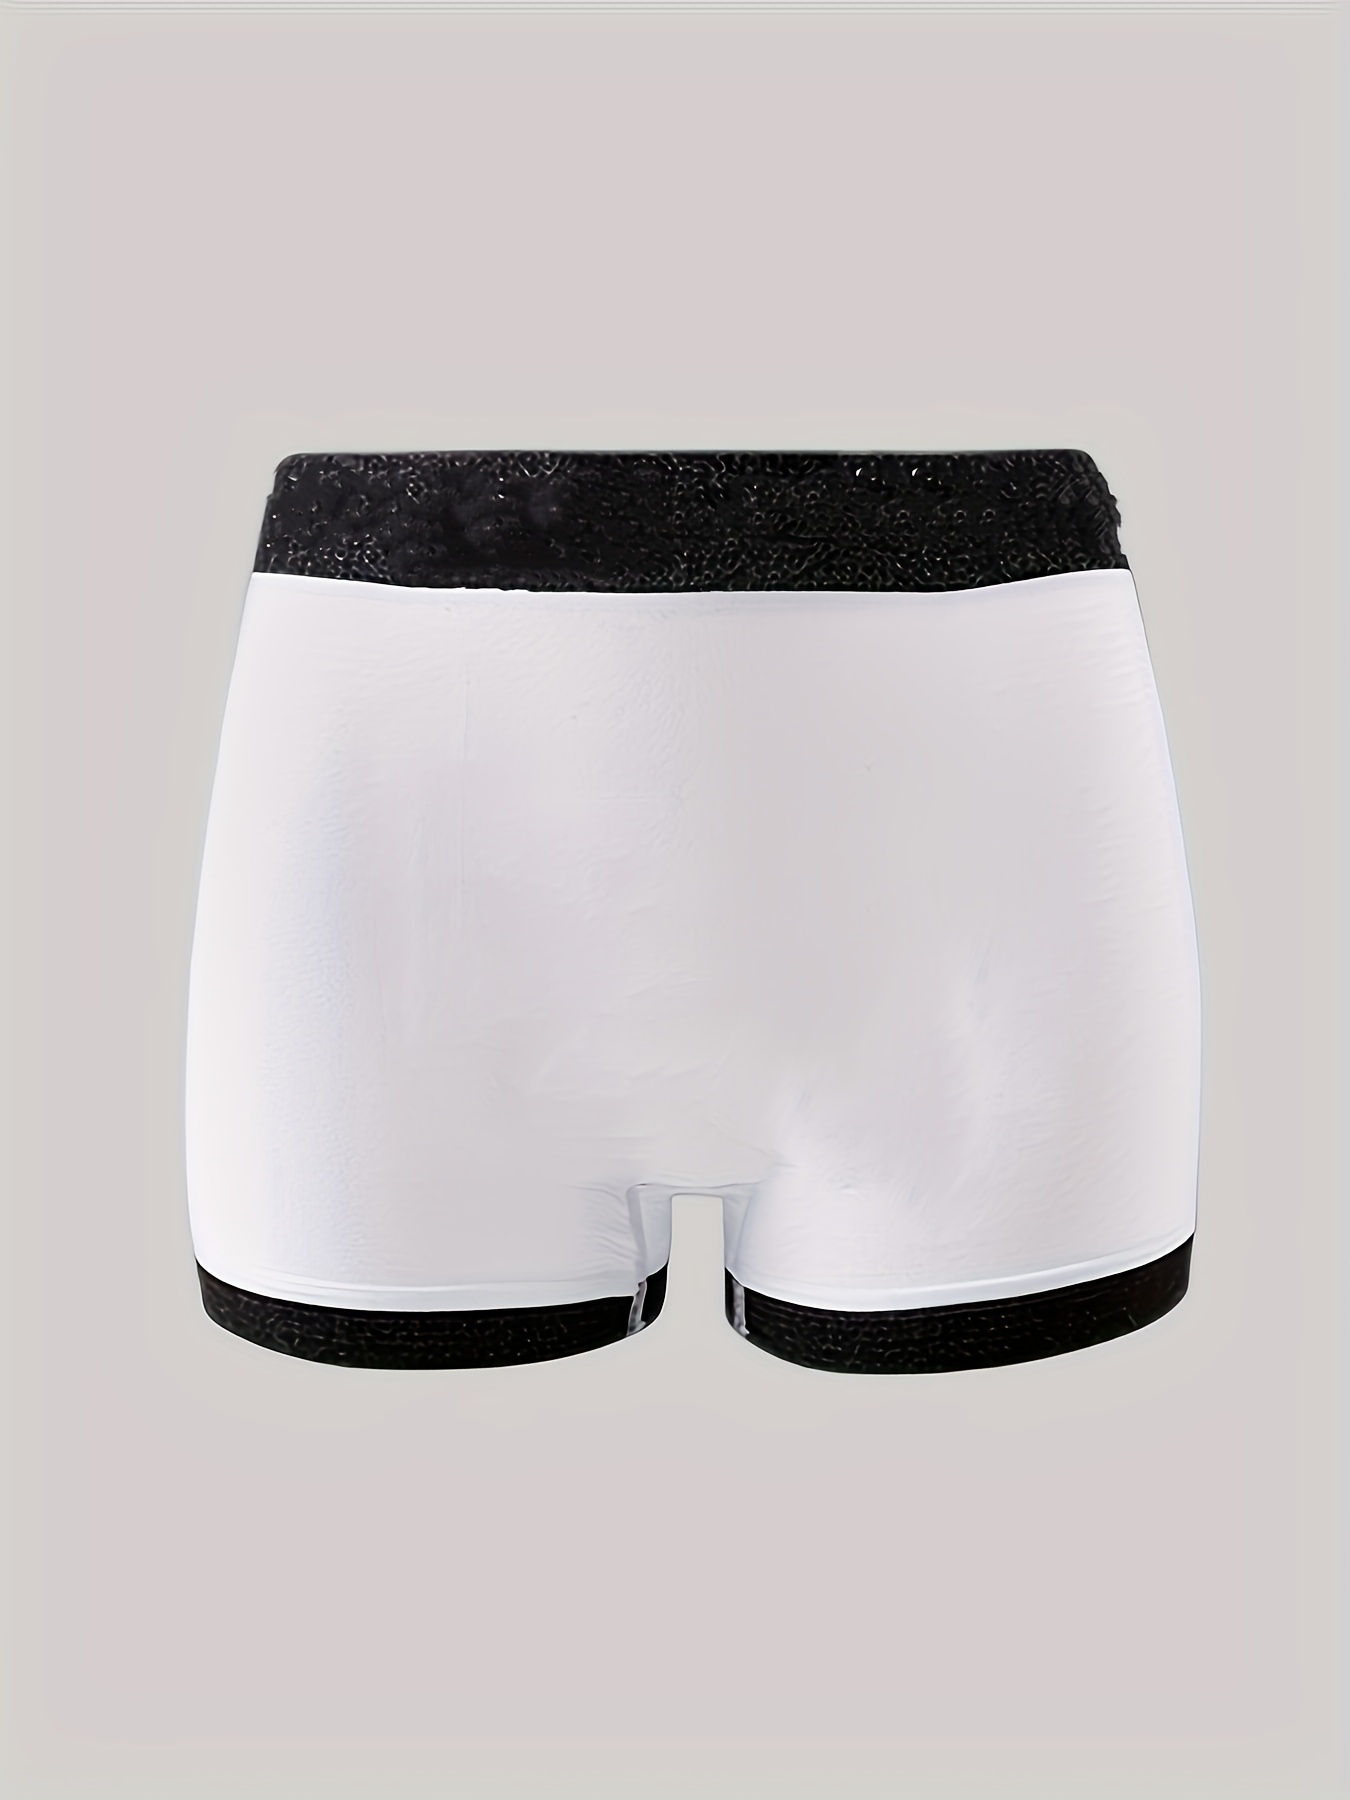 1 3pcs mens emotional face breathable boxer brief soft comfortable underwear for man details 11